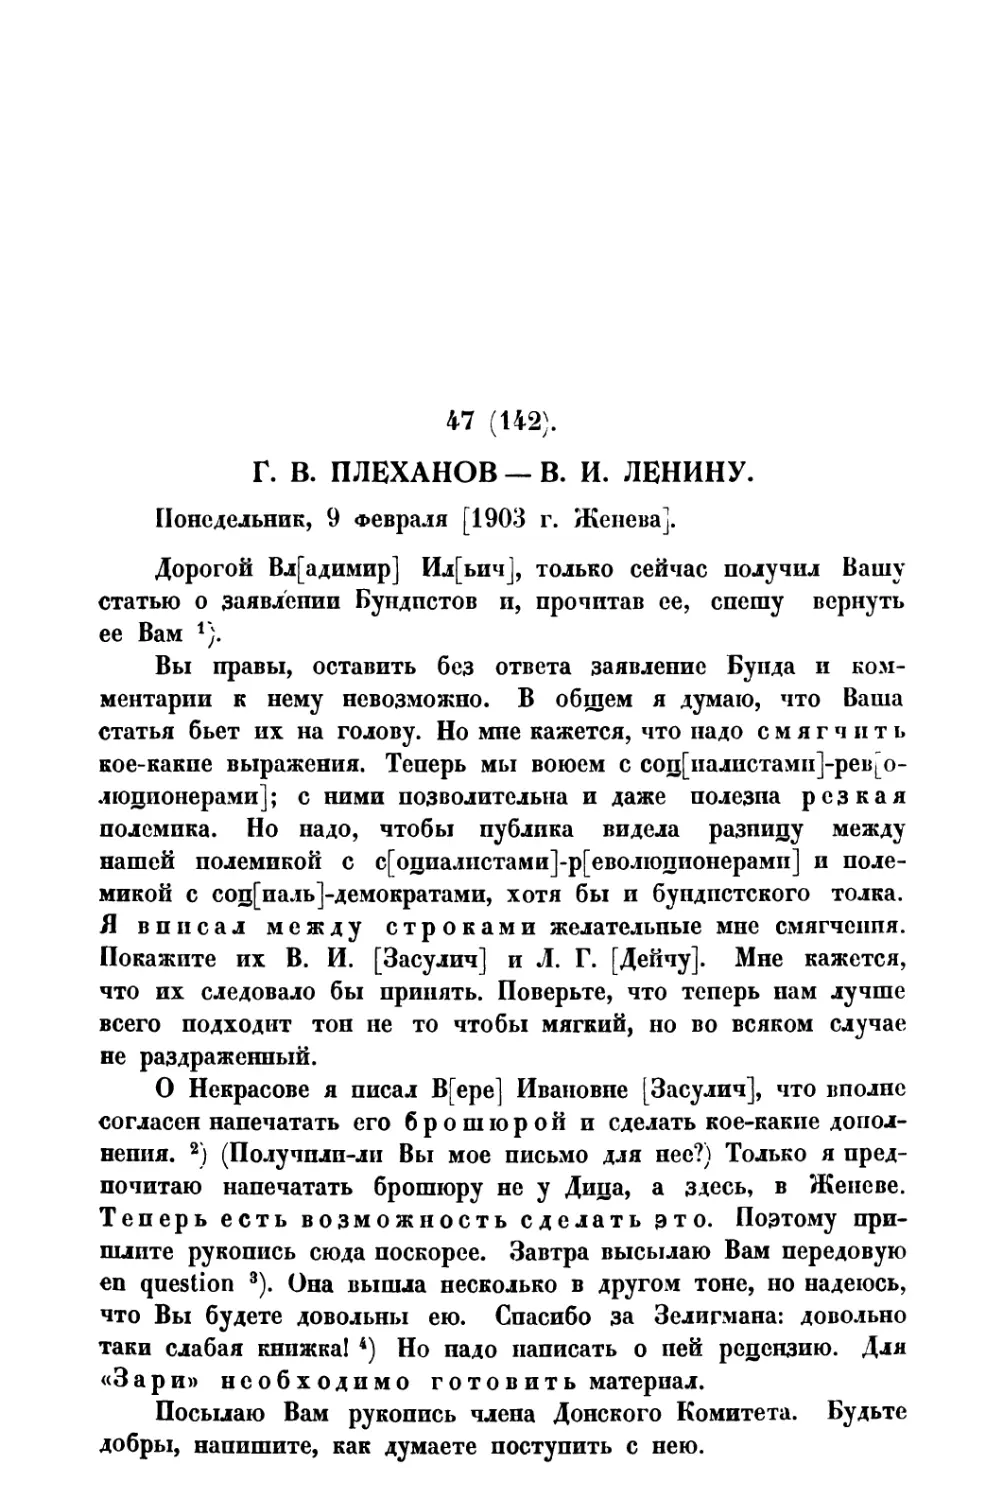 47. Г. В. Плеханов — В. И. Ленину от 9 II 1903 г